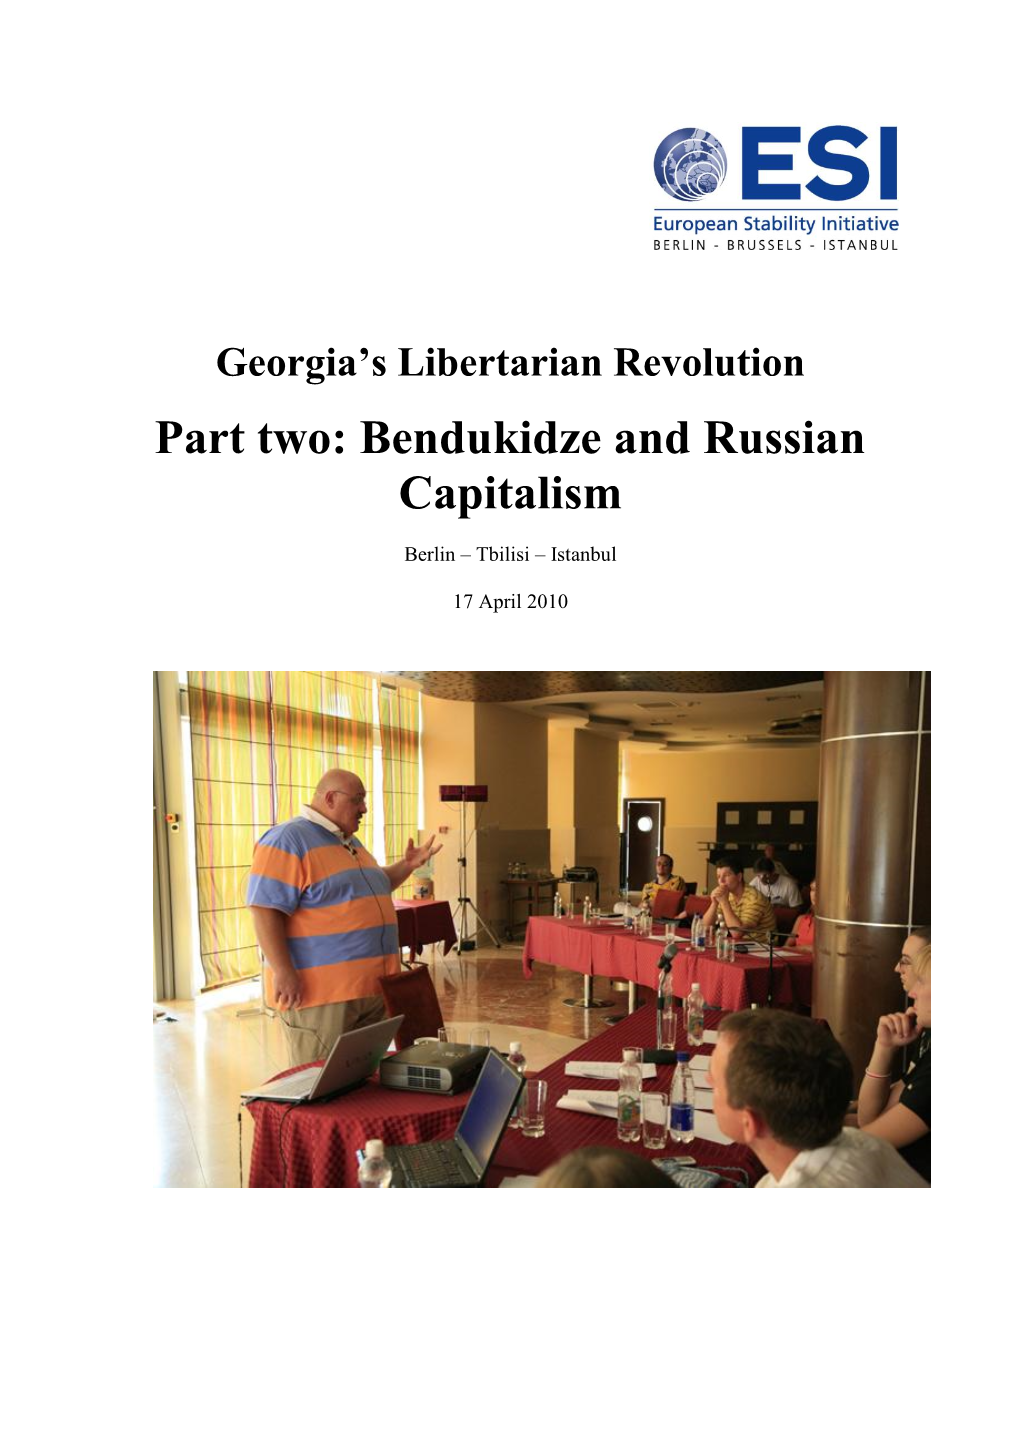 Bendukidze and Russian Capitalism